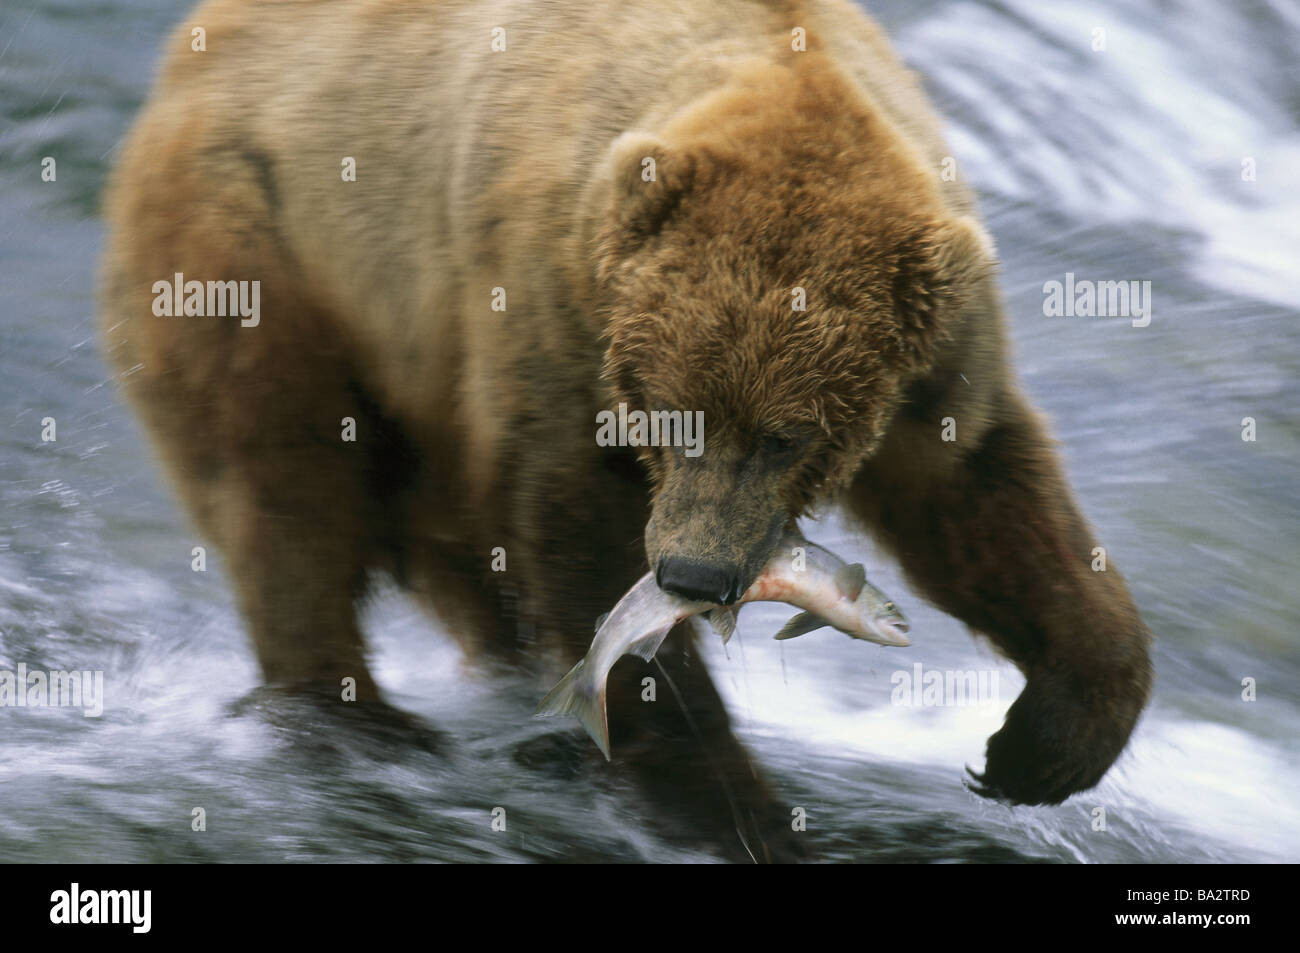 USA Alaska Katami national-park waterfall grizzly bear Ursus arctos horribilis salmon catches broached United States North Stock Photo